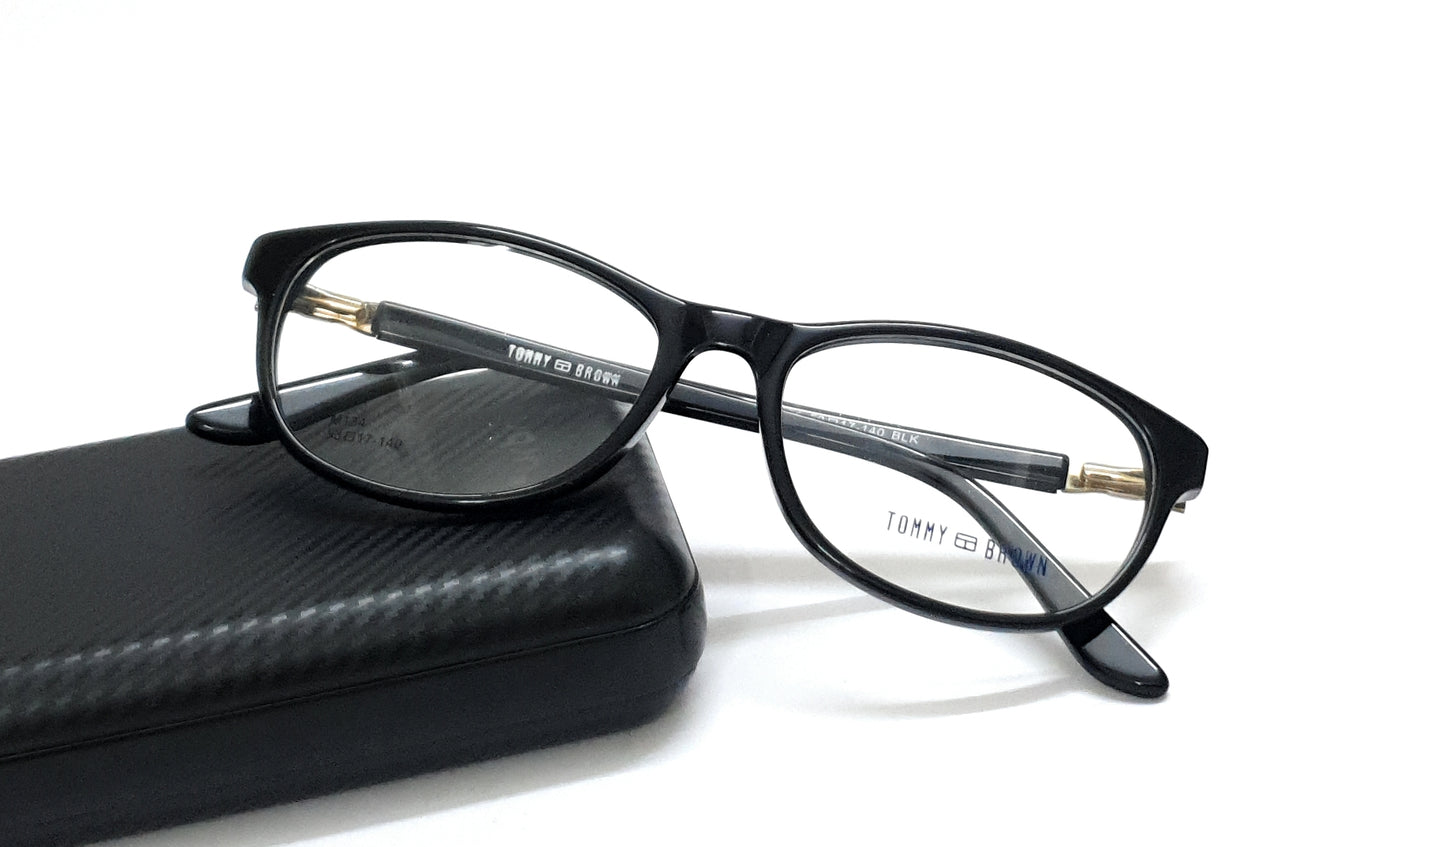 Tommy Brown Styles Eyeglasses M134 Black Spectacle